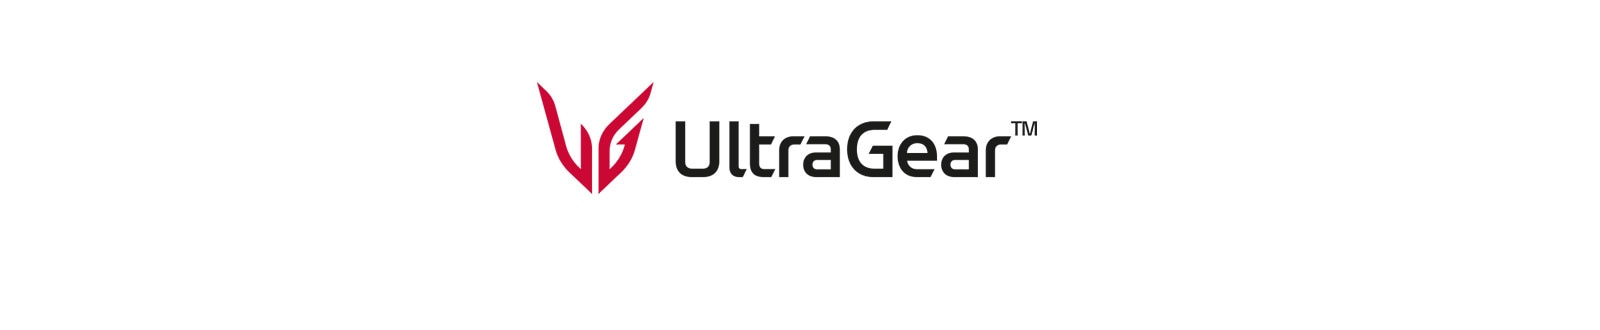 UltraGear™ gaming monitor.	